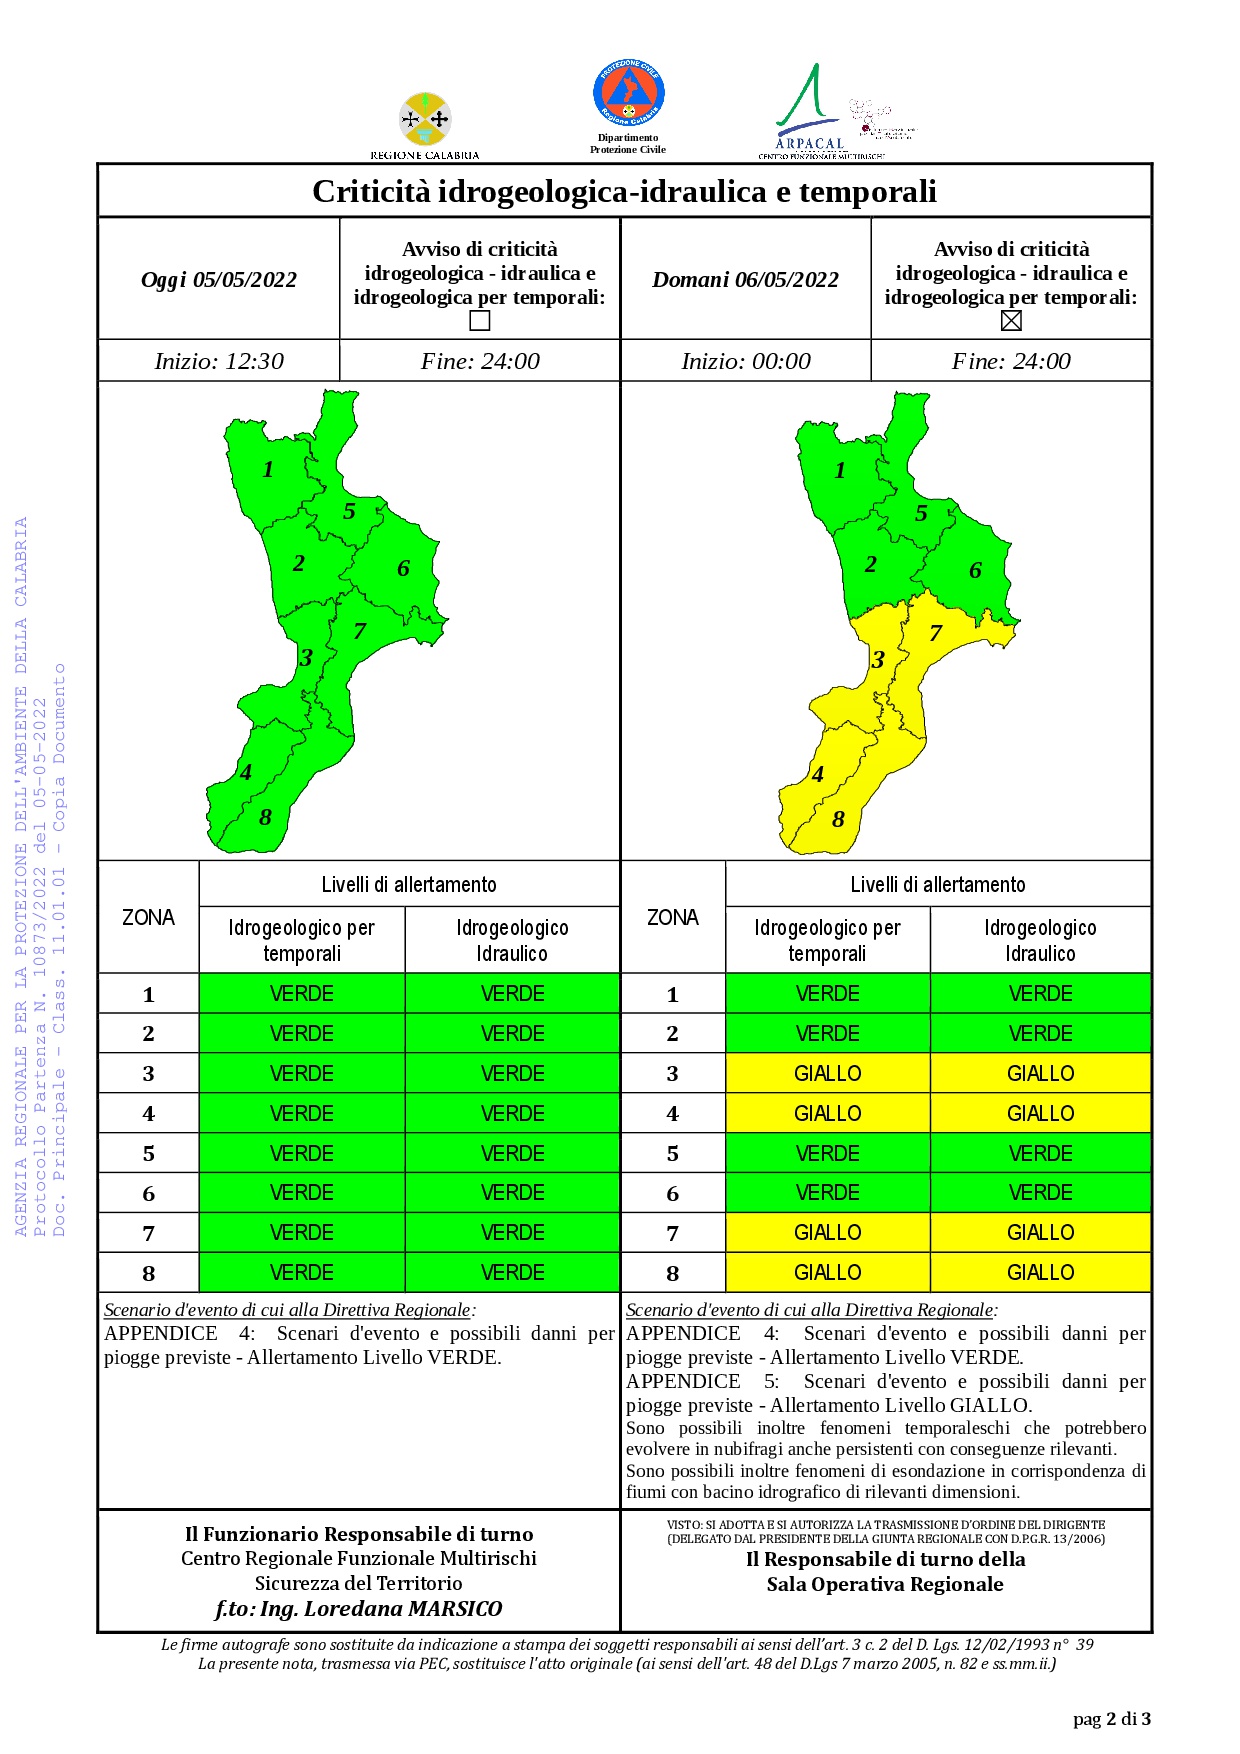 Criticità idrogeologica-idraulica e temporali in Calabria 05-05-2022